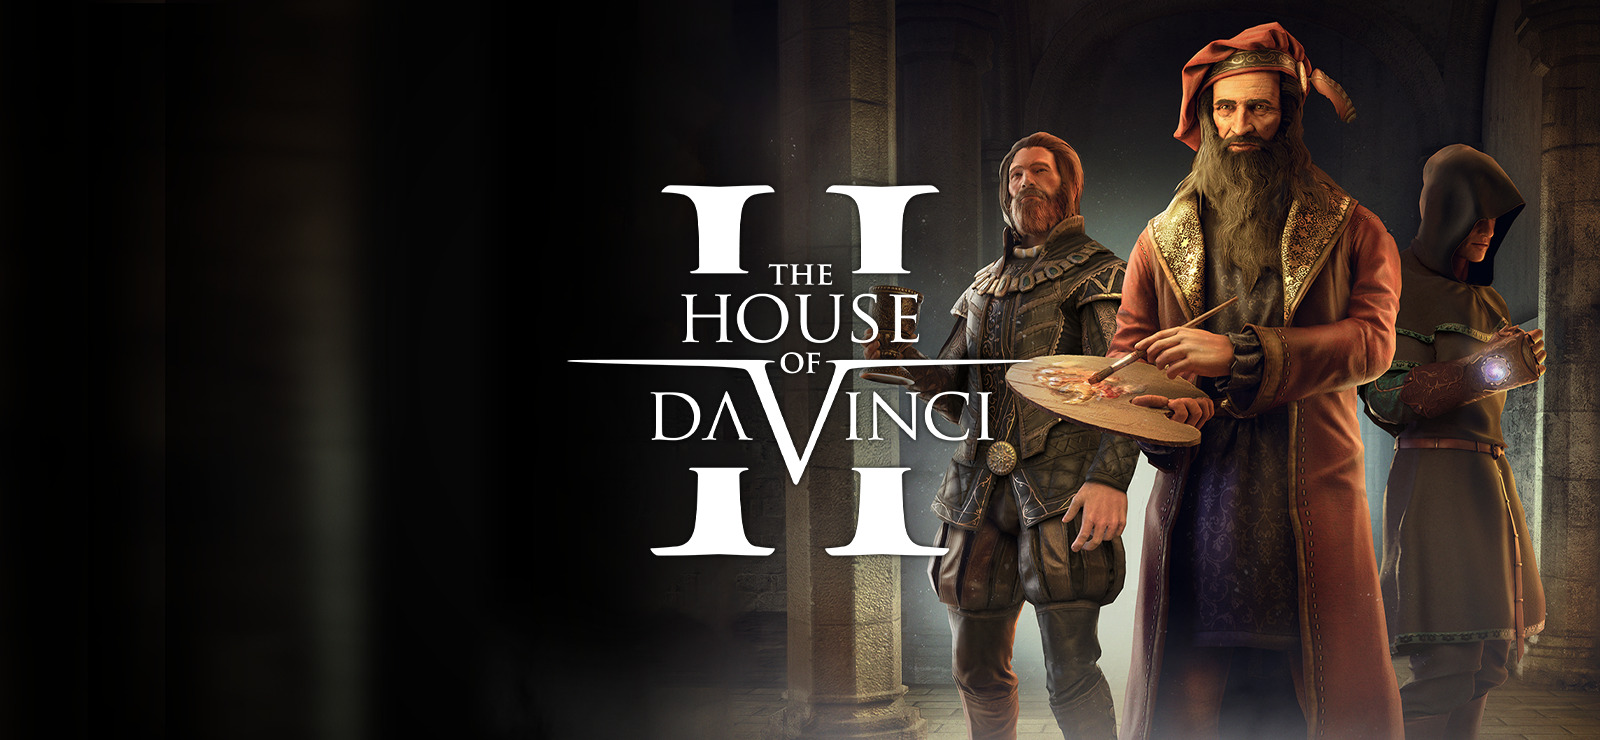 The House of Da Vinci 2 PC Game Free Download